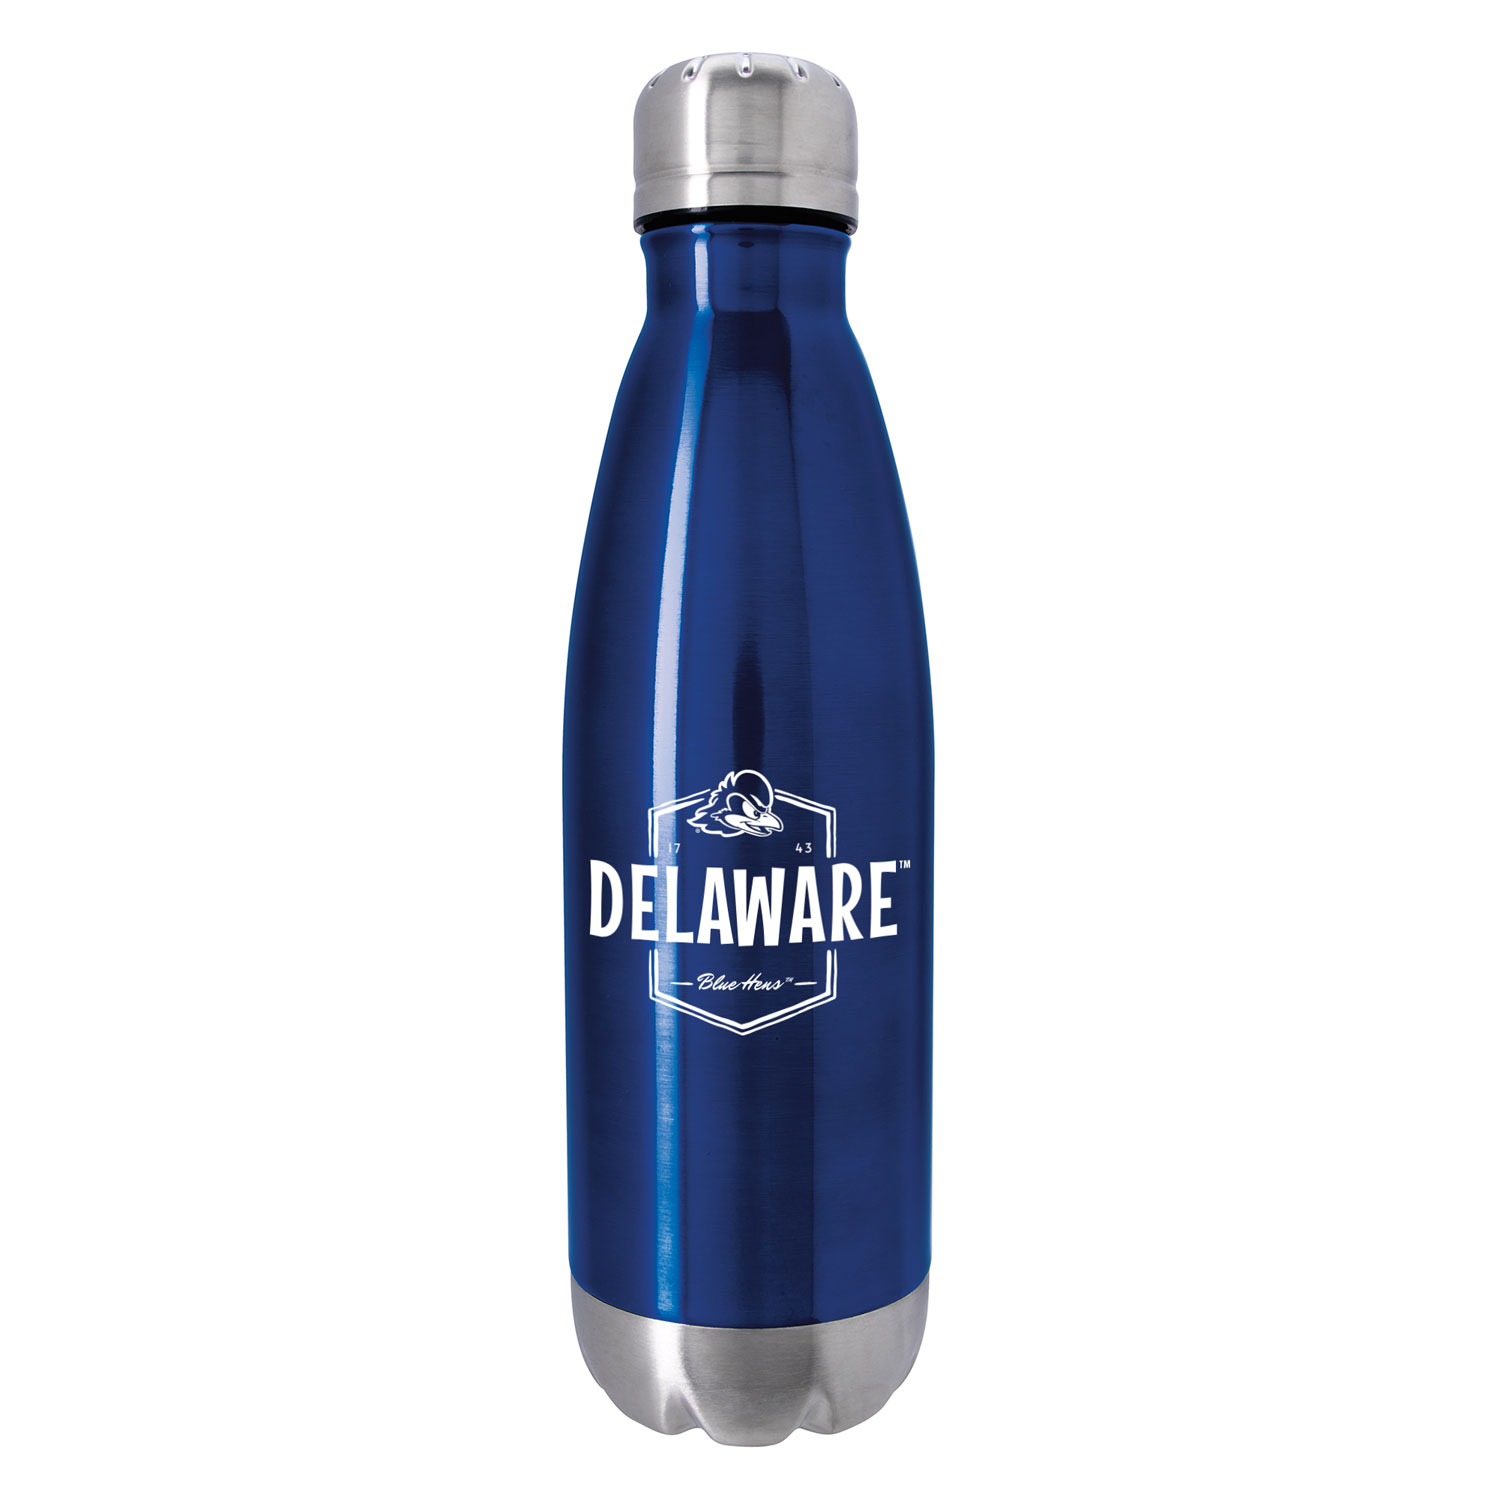 12oz Metal Water Bottle – Lake Erie Islands Nature & Wildlife Center